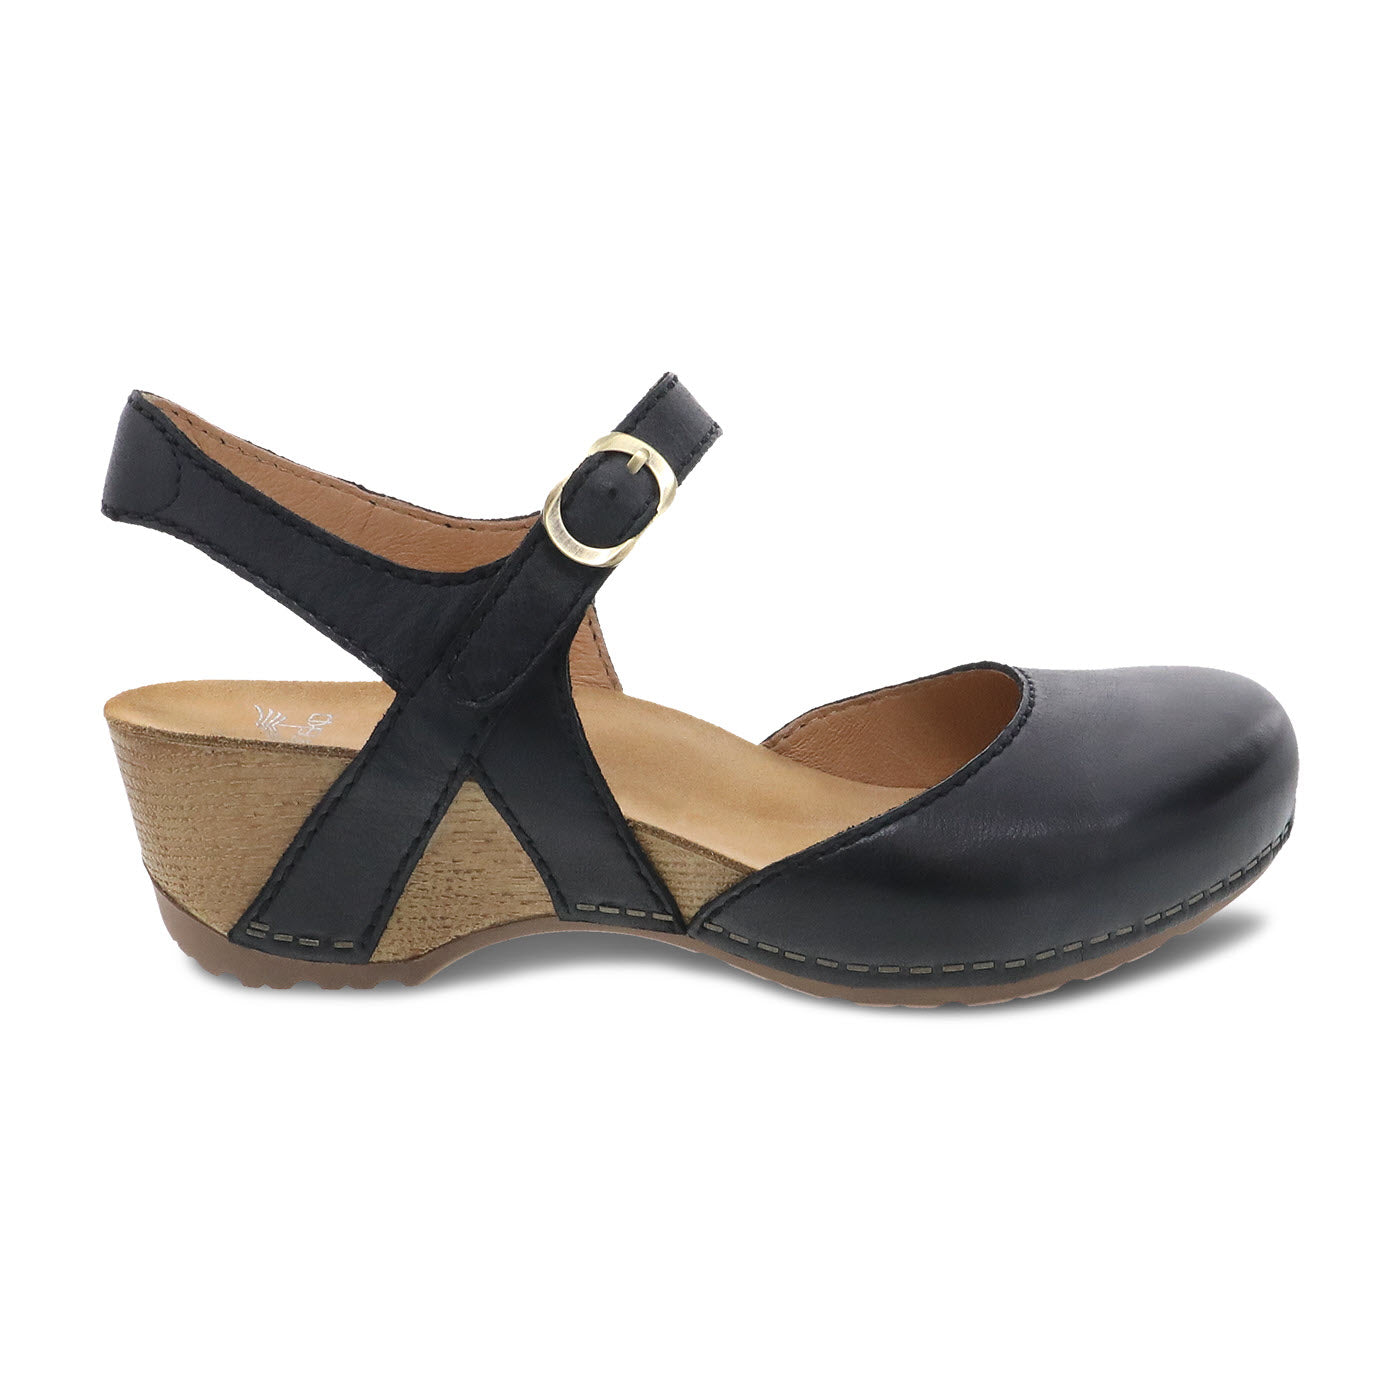 Black women's Dansko Tiffani sandal with a buckle and a chunky wooden heel.